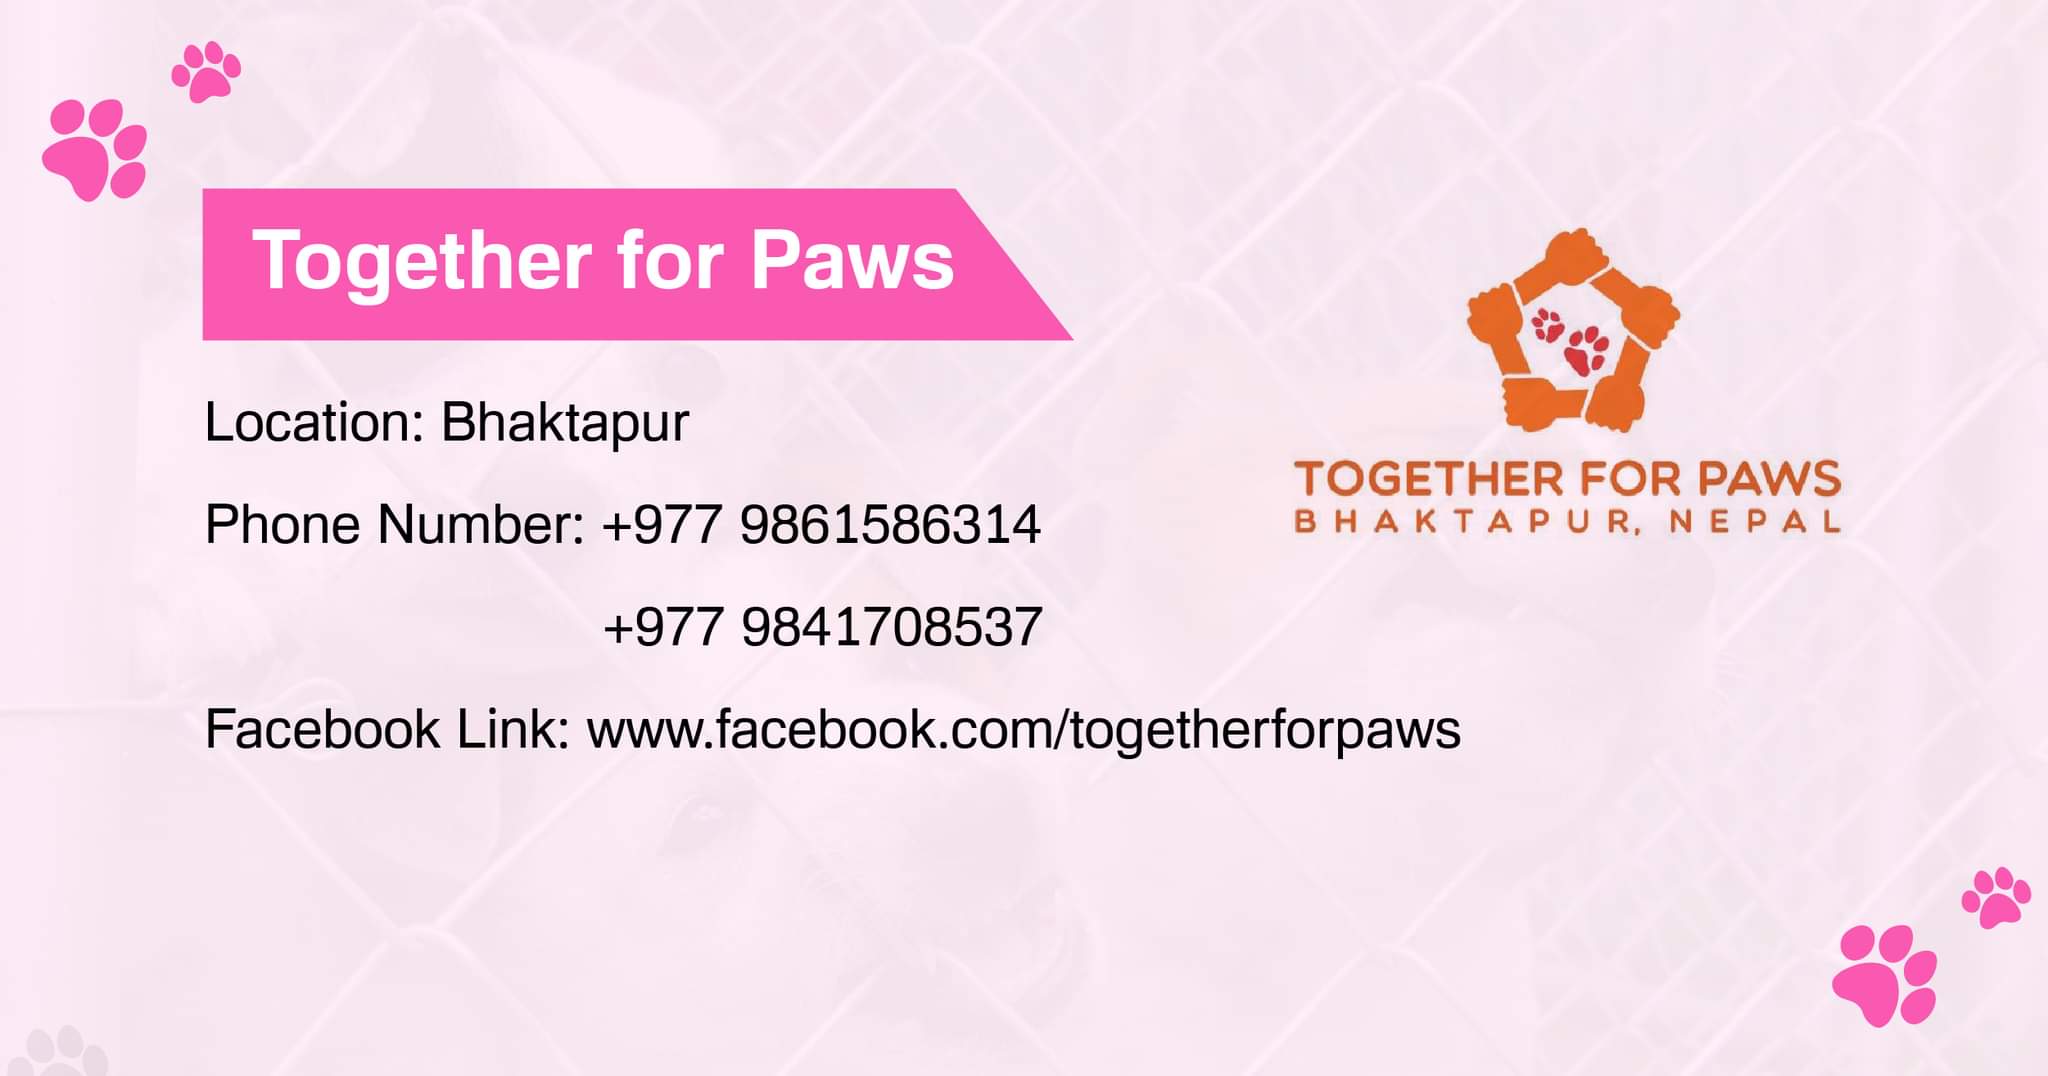 Together for Paws dog adoption